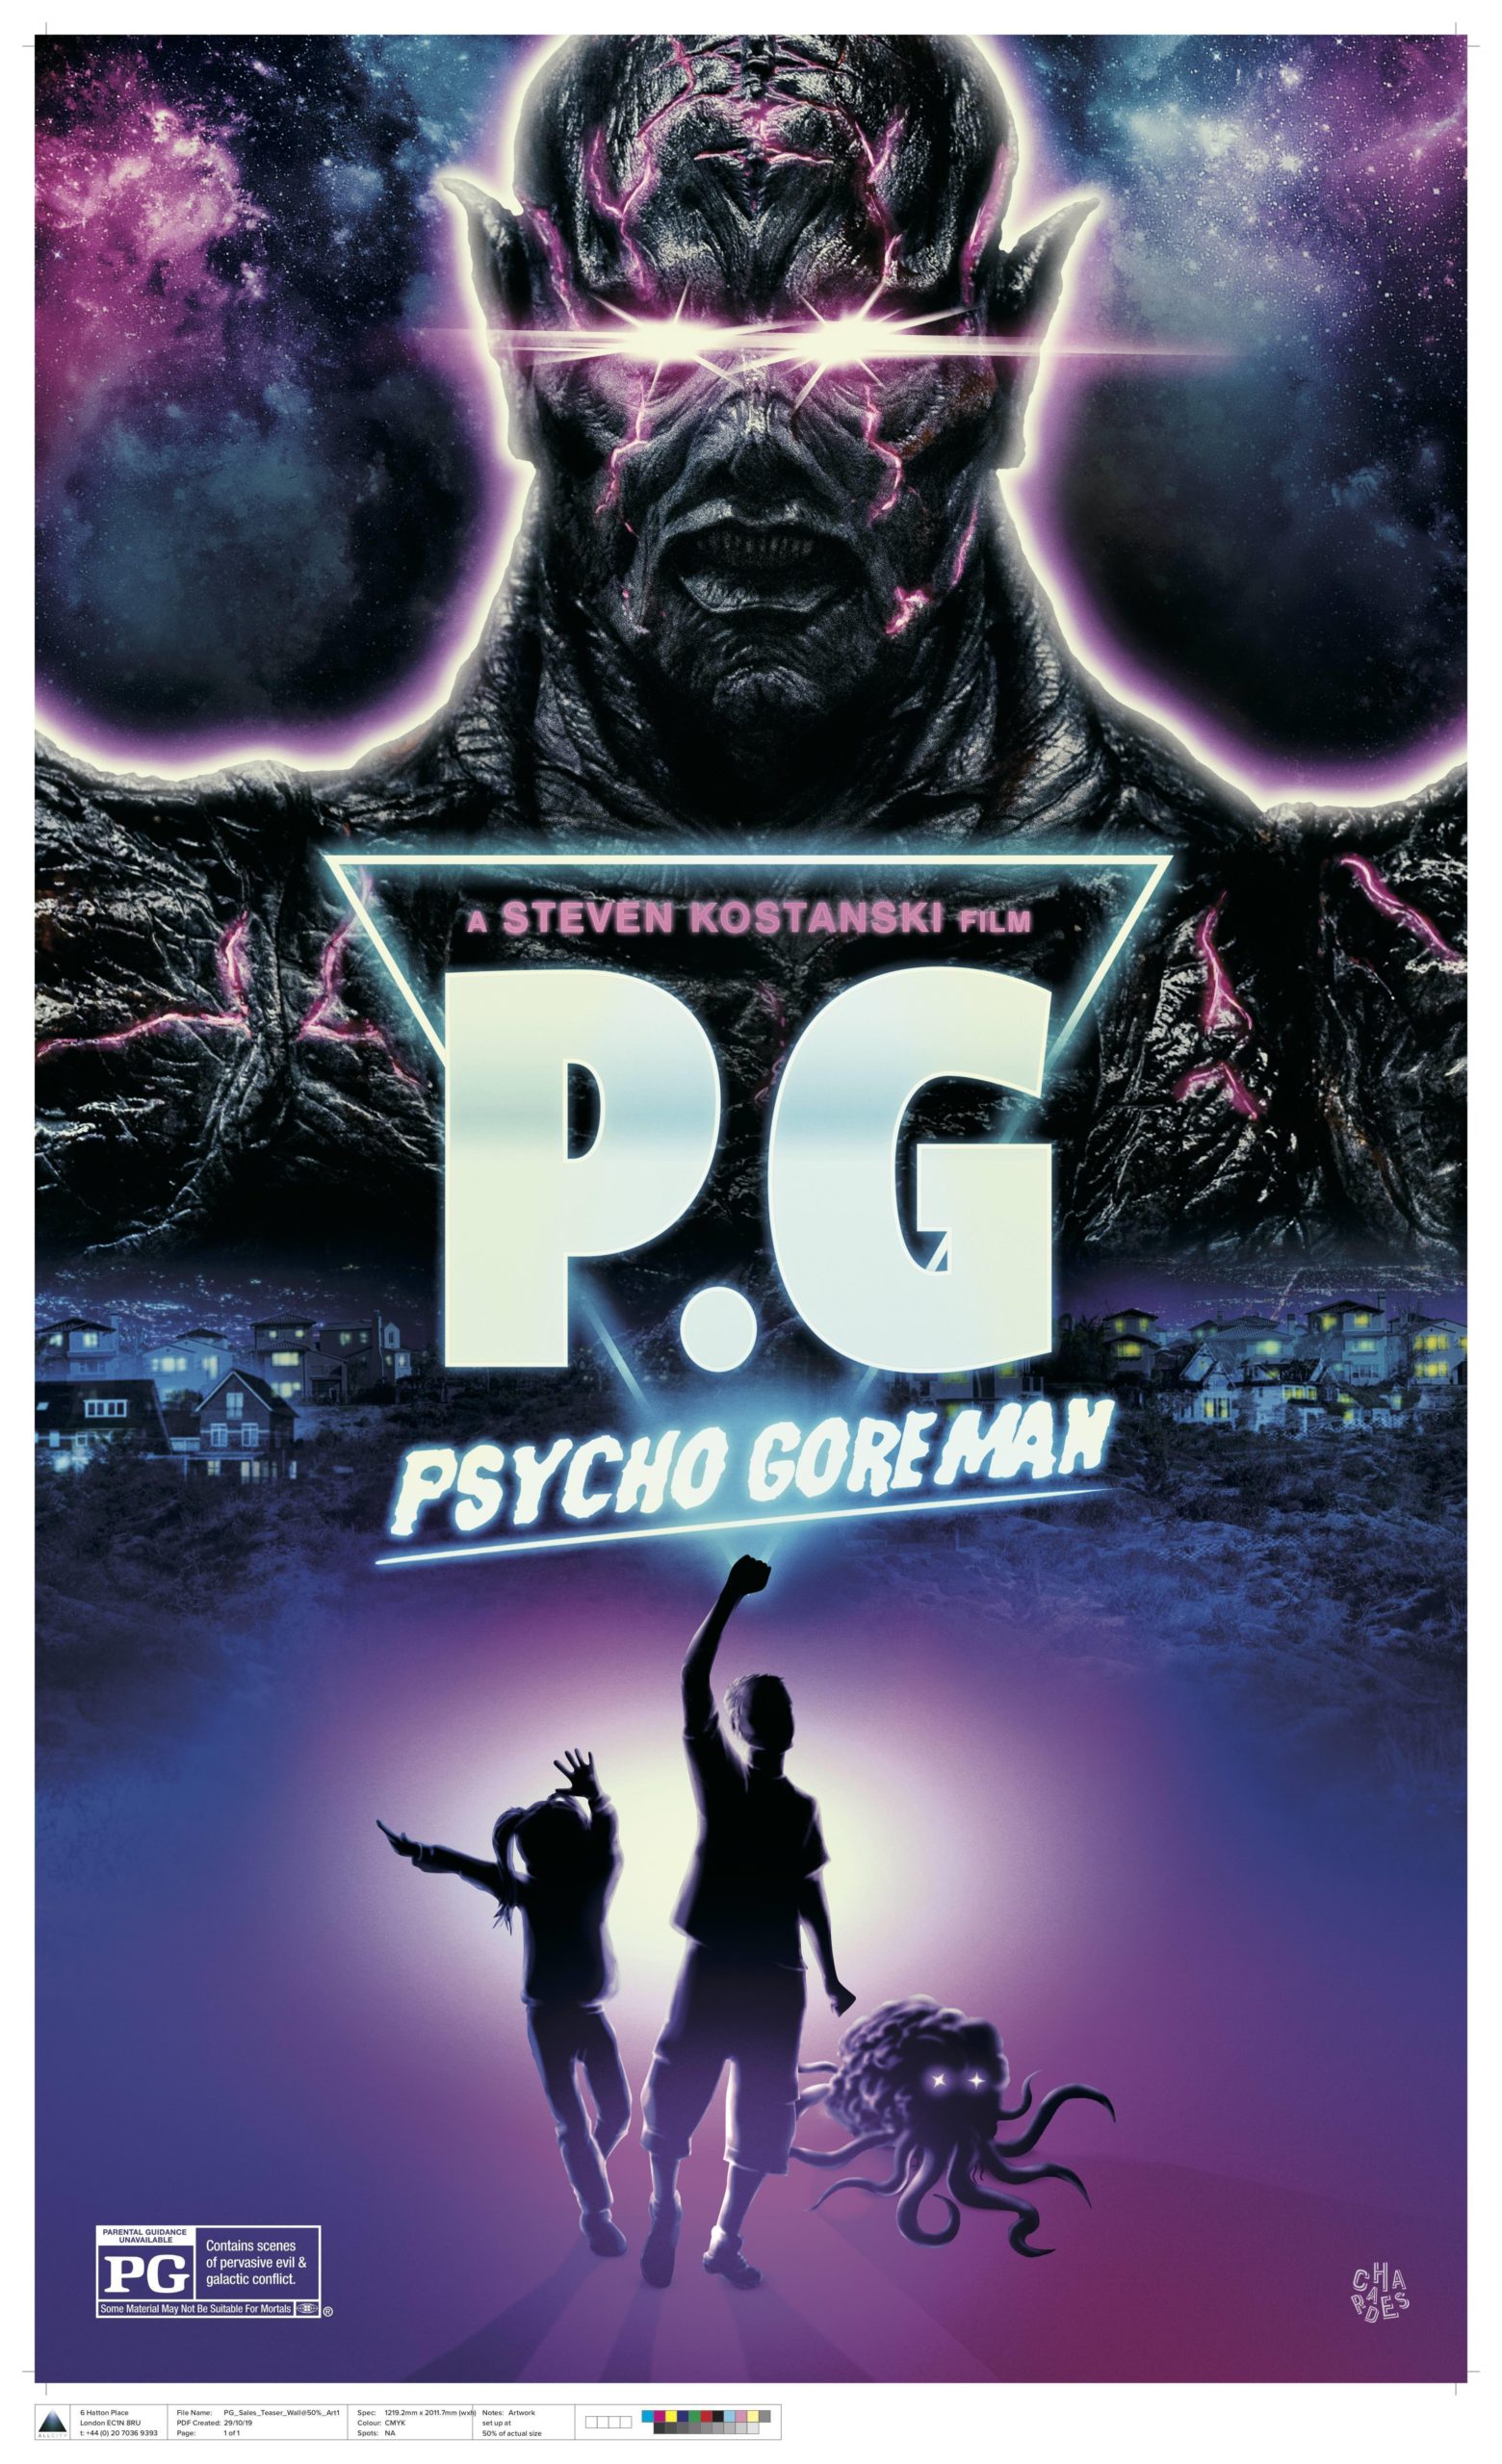 Poster for Psycho Goreman